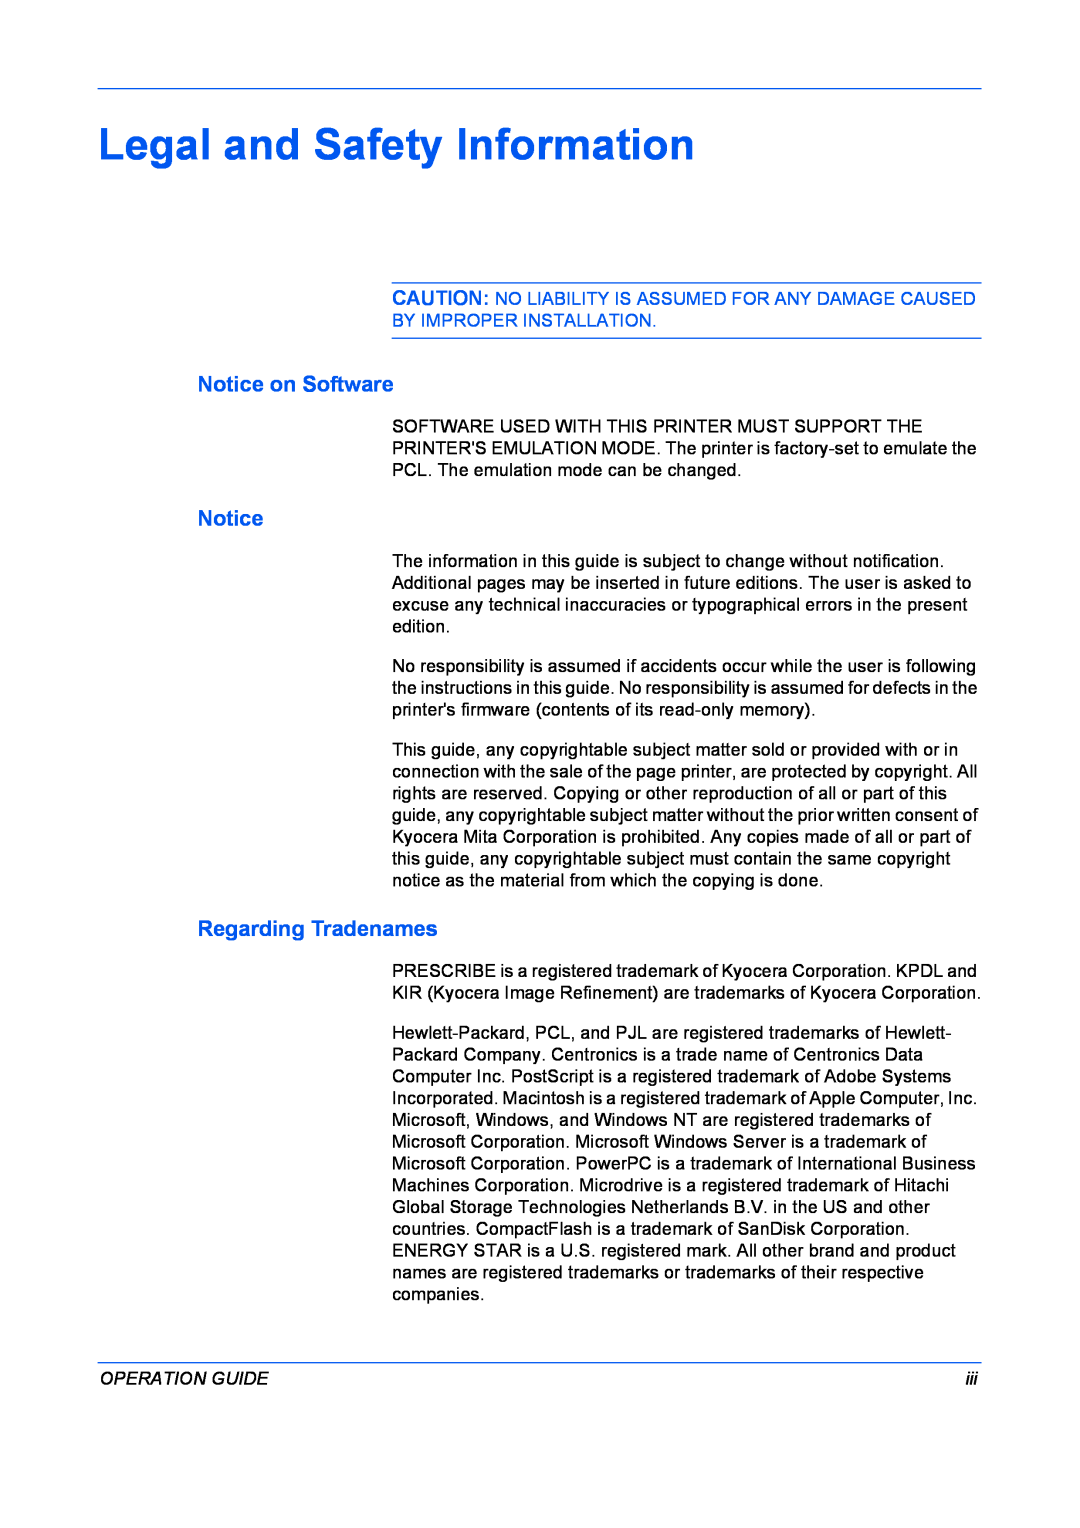 Kyocera FS-9130DN manual Legal and Safety Information, Notice on Software, Regarding Tradenames, By Improper Installation 